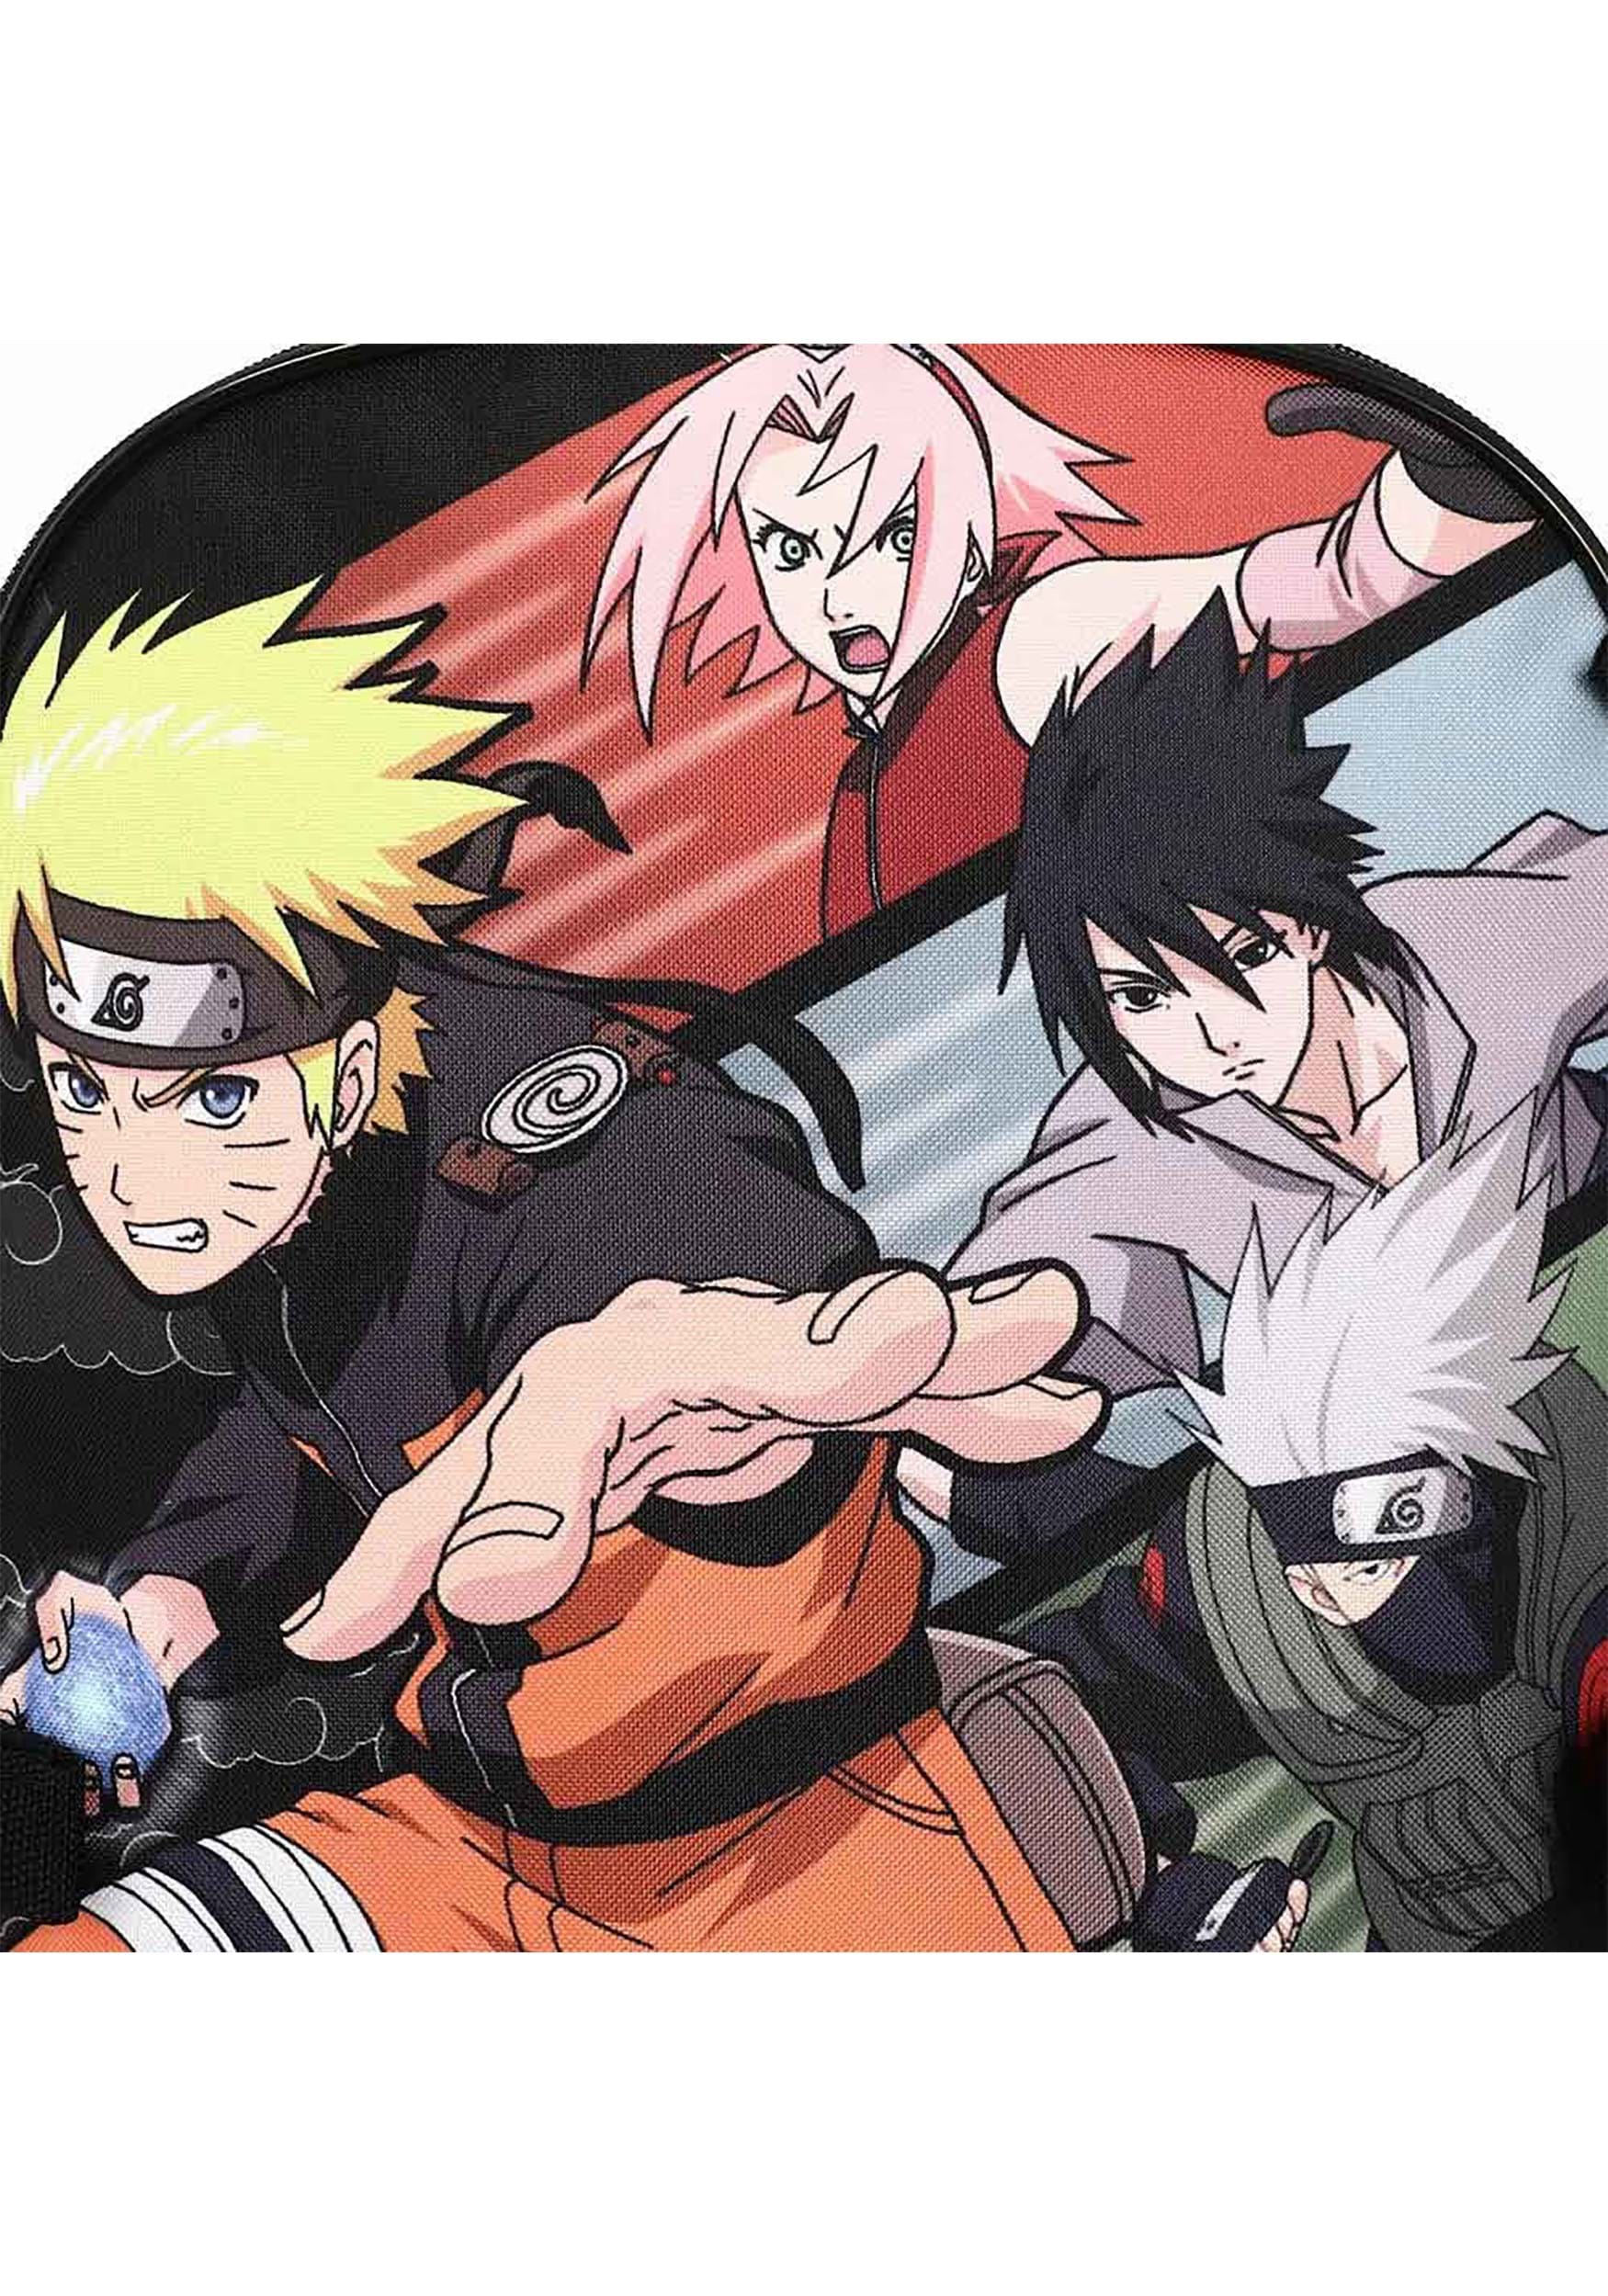 Naruto Backpack Naruto and Pain Anime Backpack Bookbag